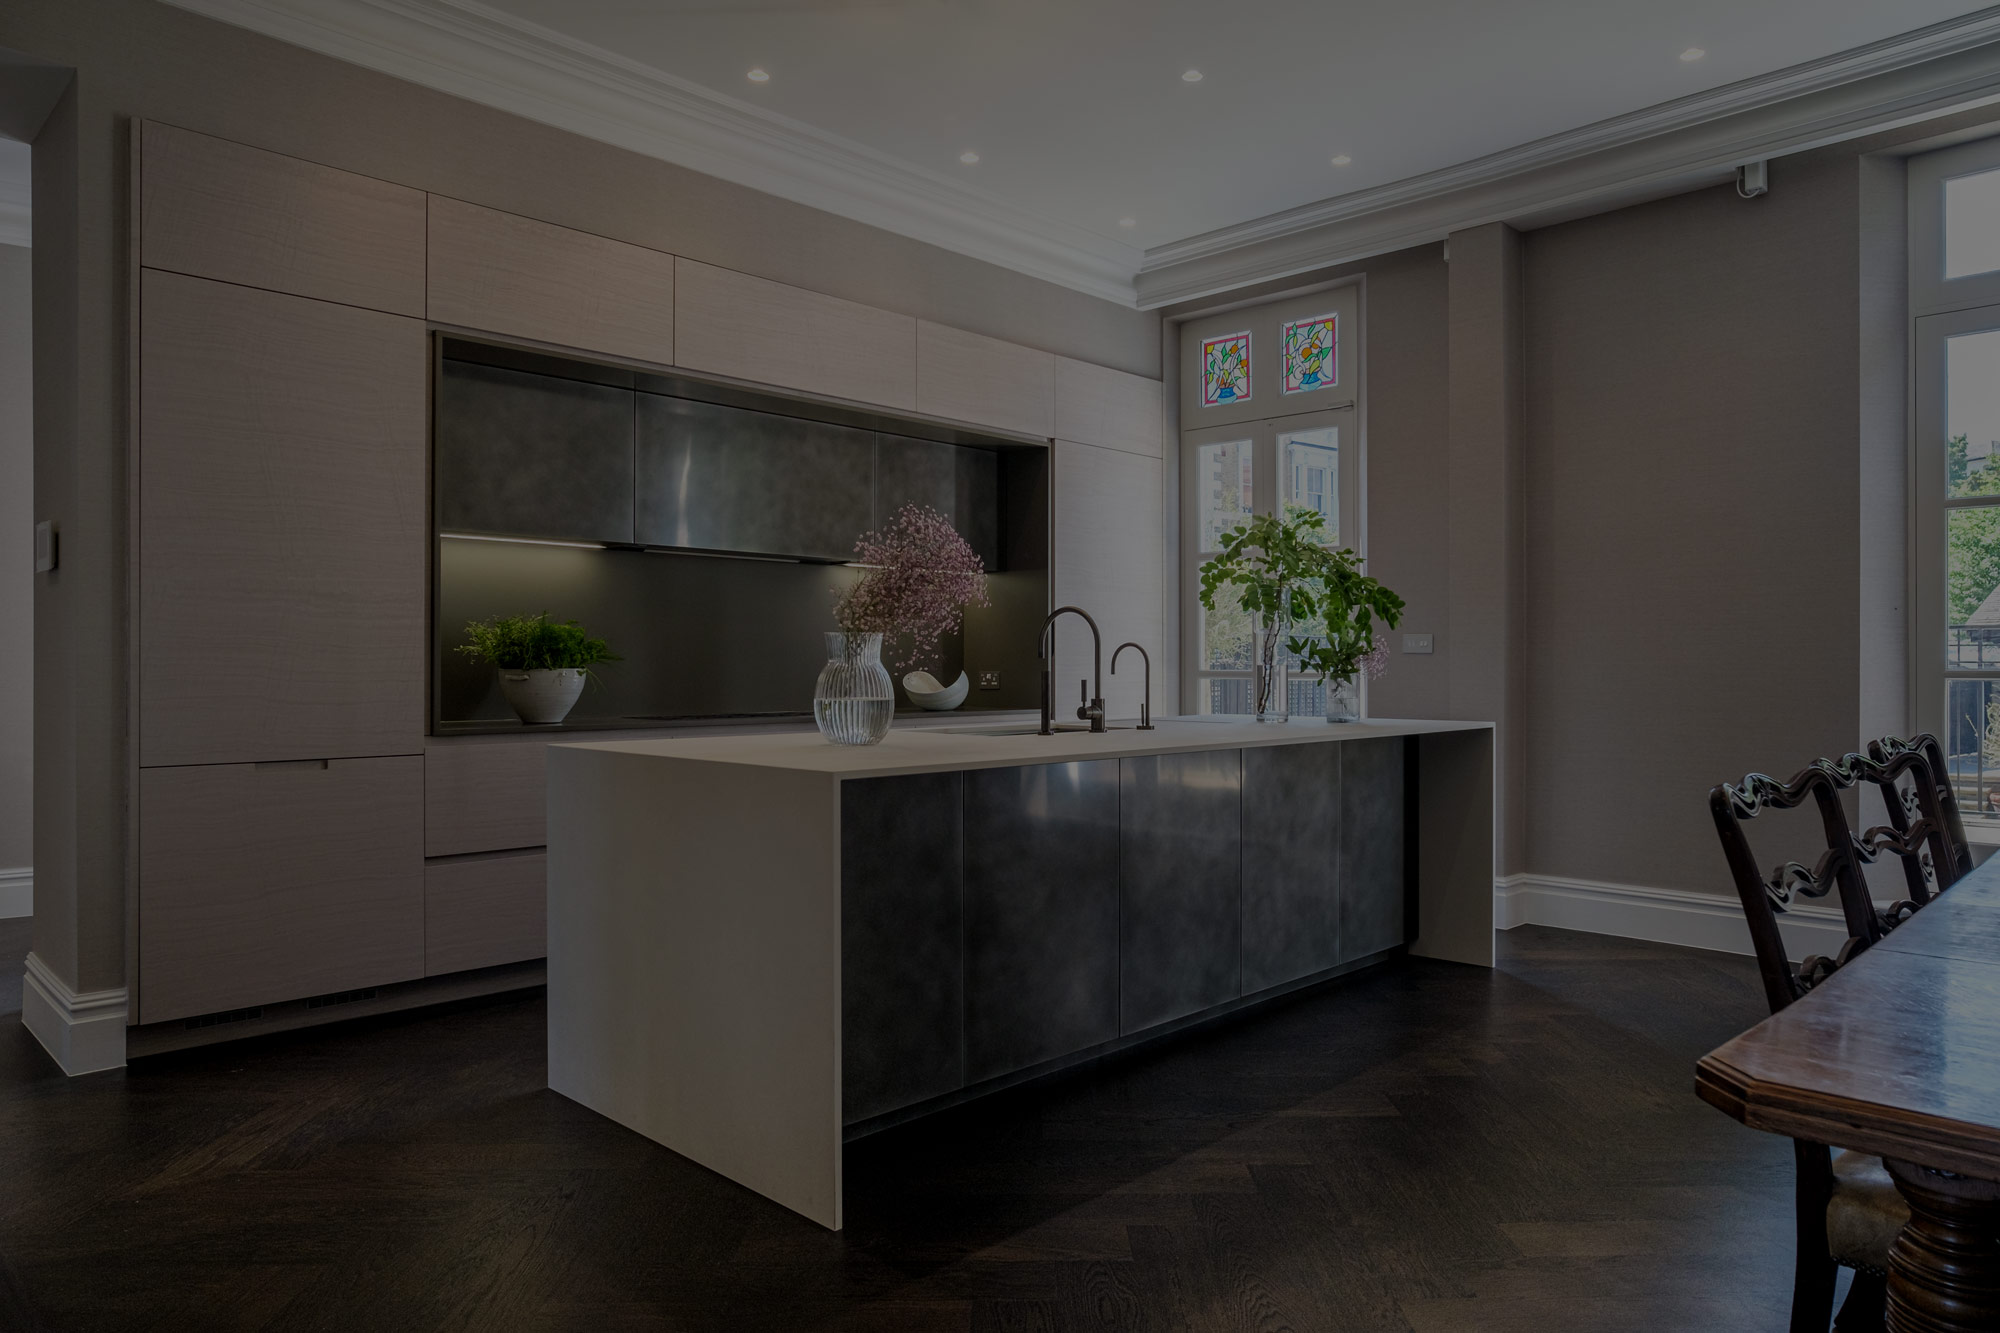 Bespoke kitchen london by Fontana in Belsize Park kitchen video | Design as Art | interior architectural design studio